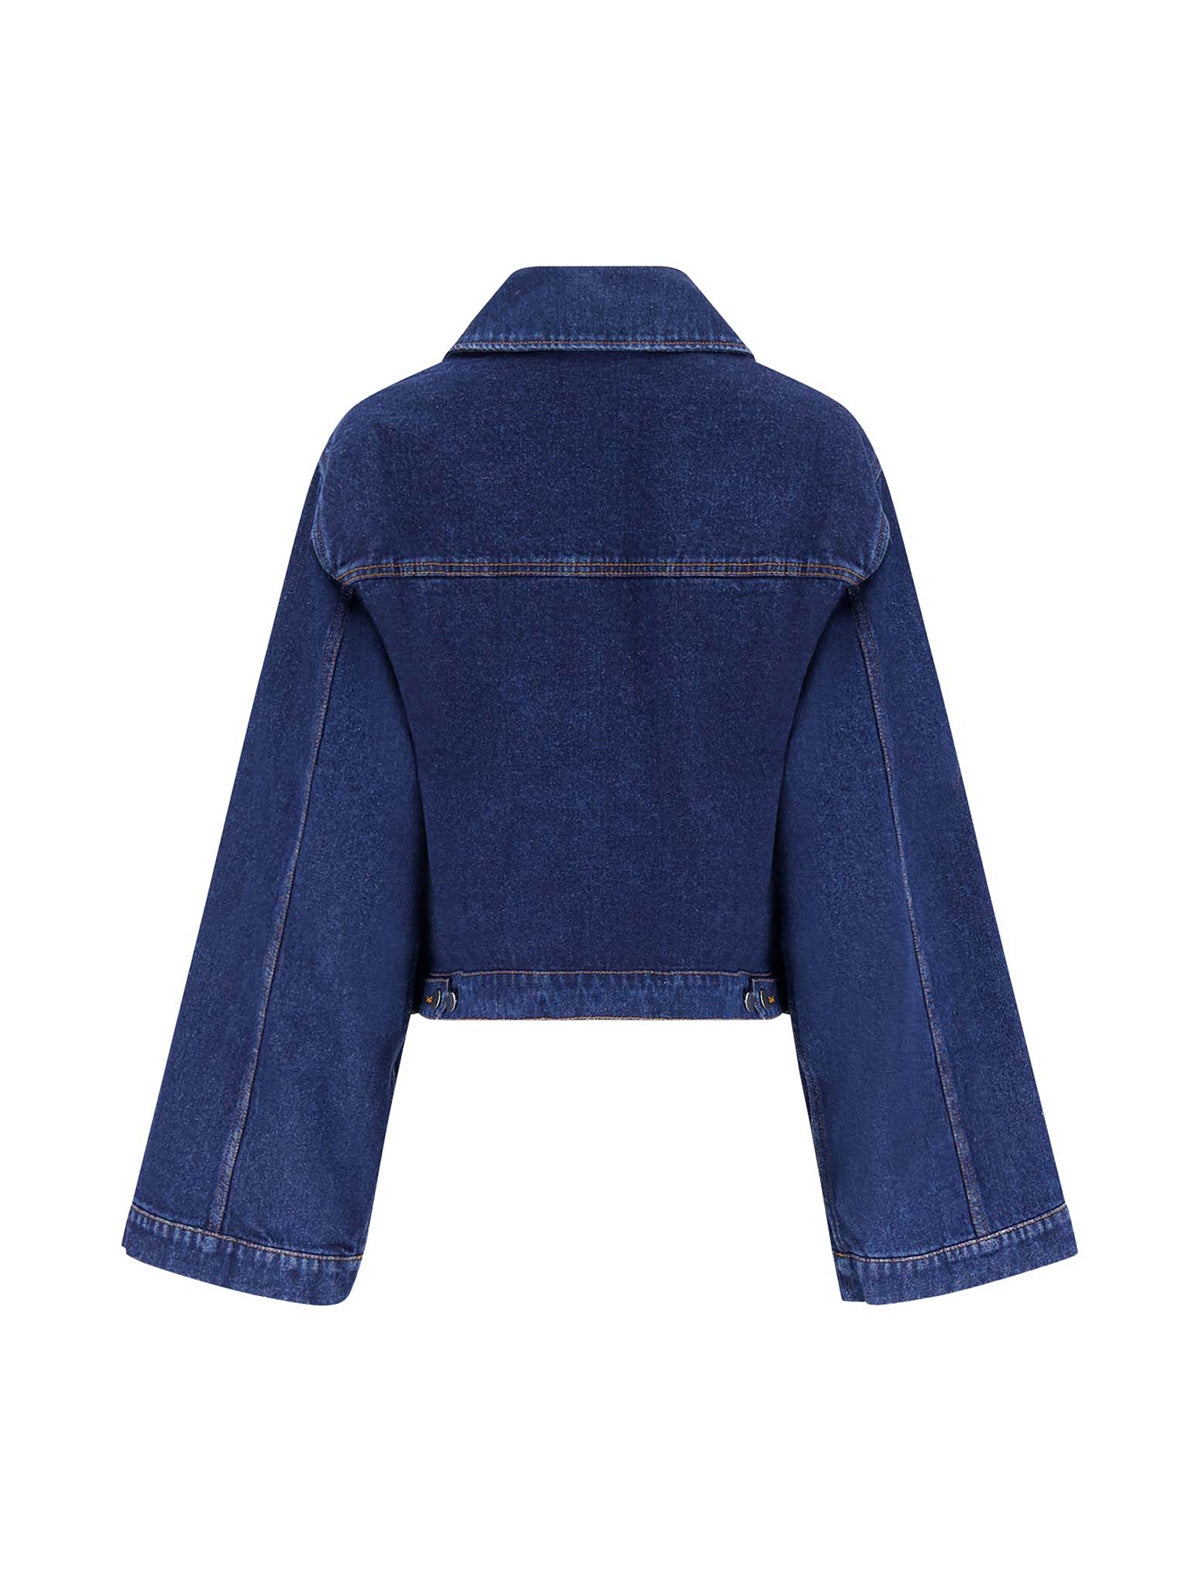 BEAUFILLE Knox Denim Jacket in Blue Wash